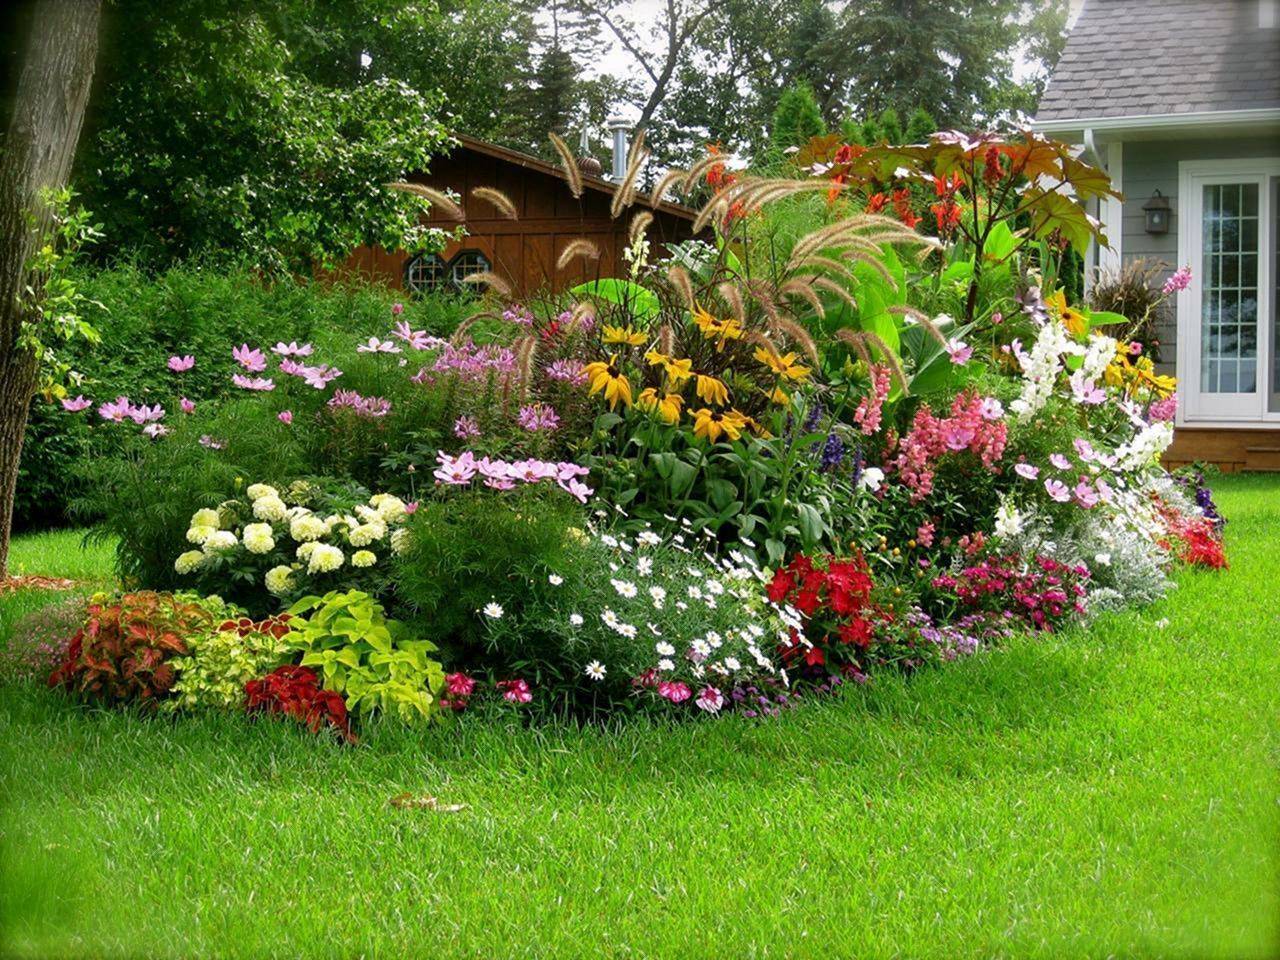 Amazing Gardens